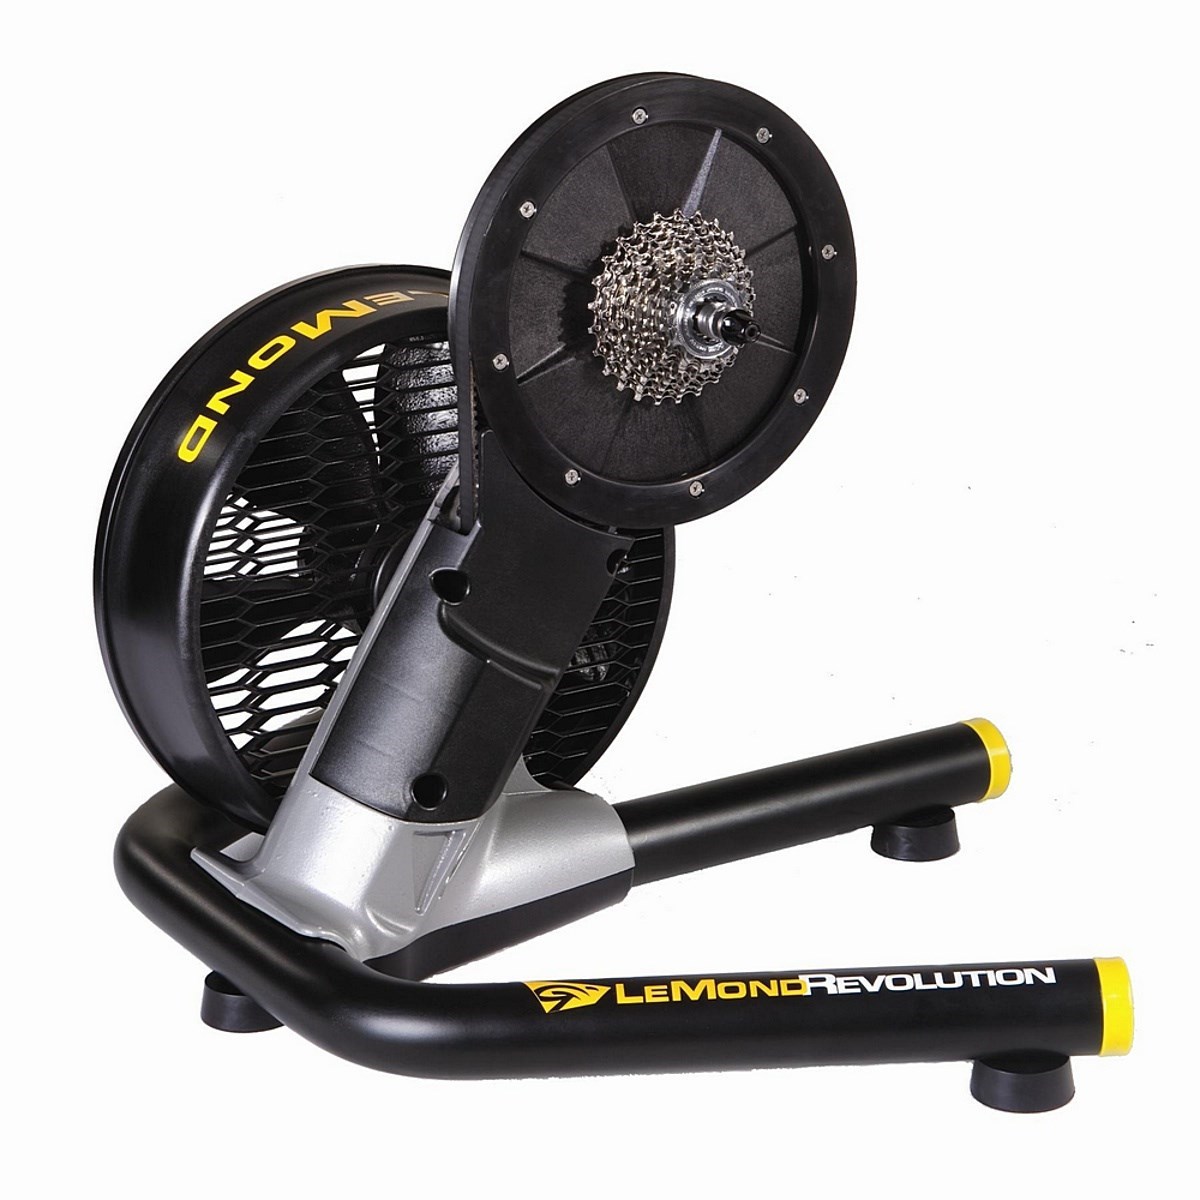 LeMond Fitness Revolution Bike Trainer product image